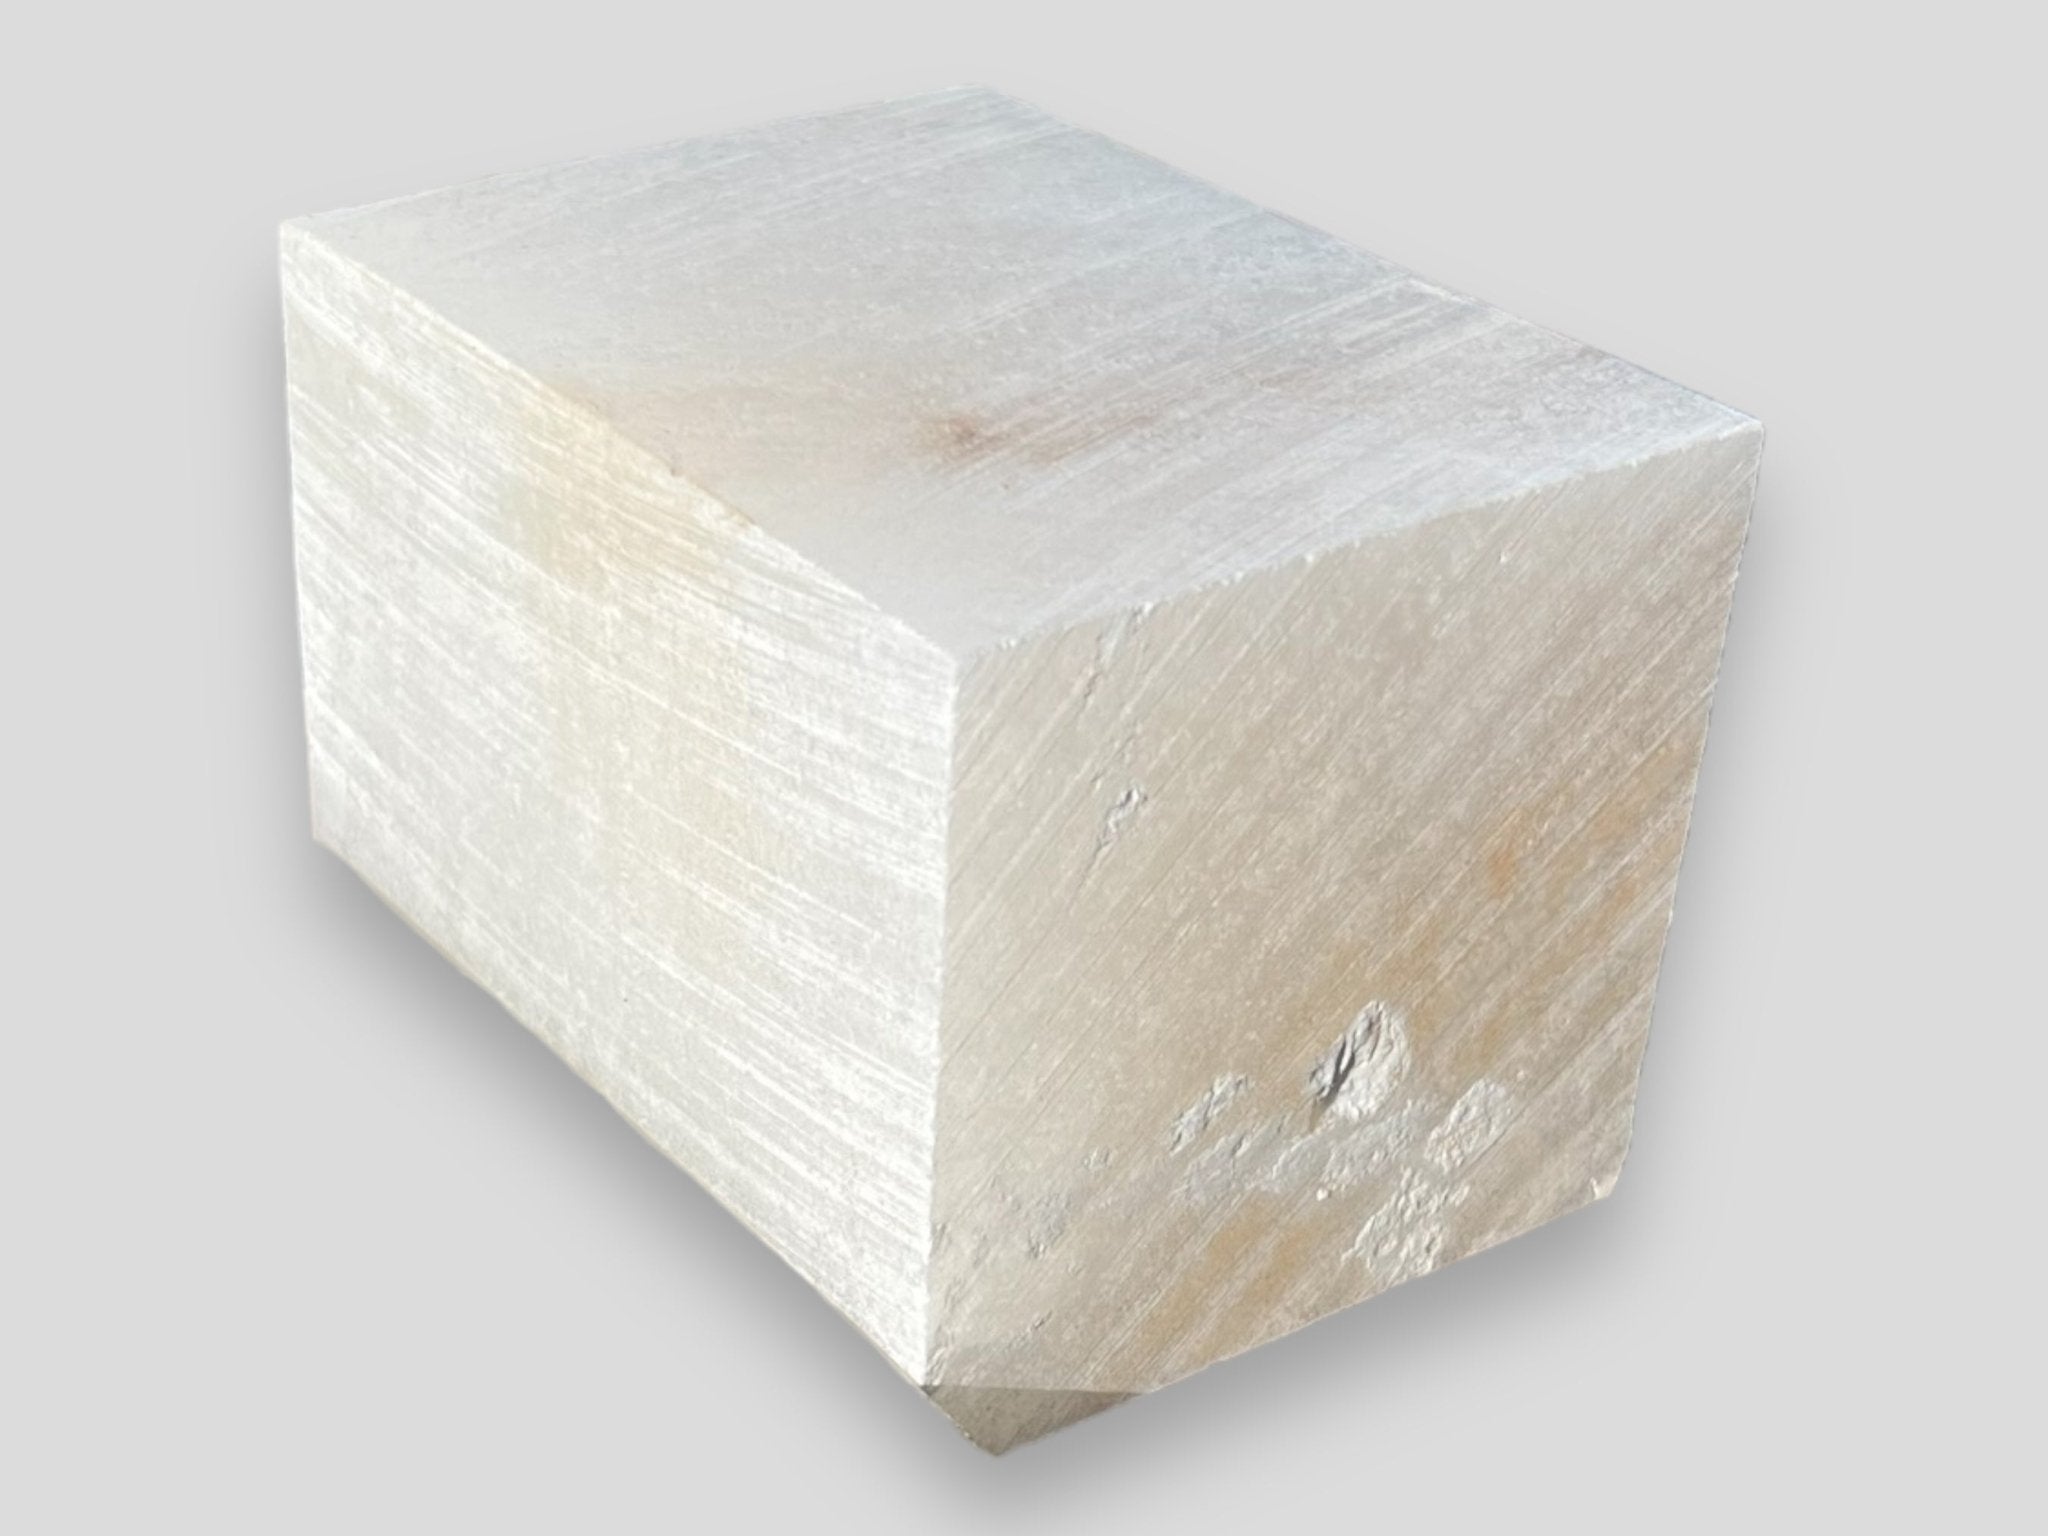 Translucent White Spanish Alabaster 10LBS 4x4x6 Block - Gian Carlo Artistic Stone